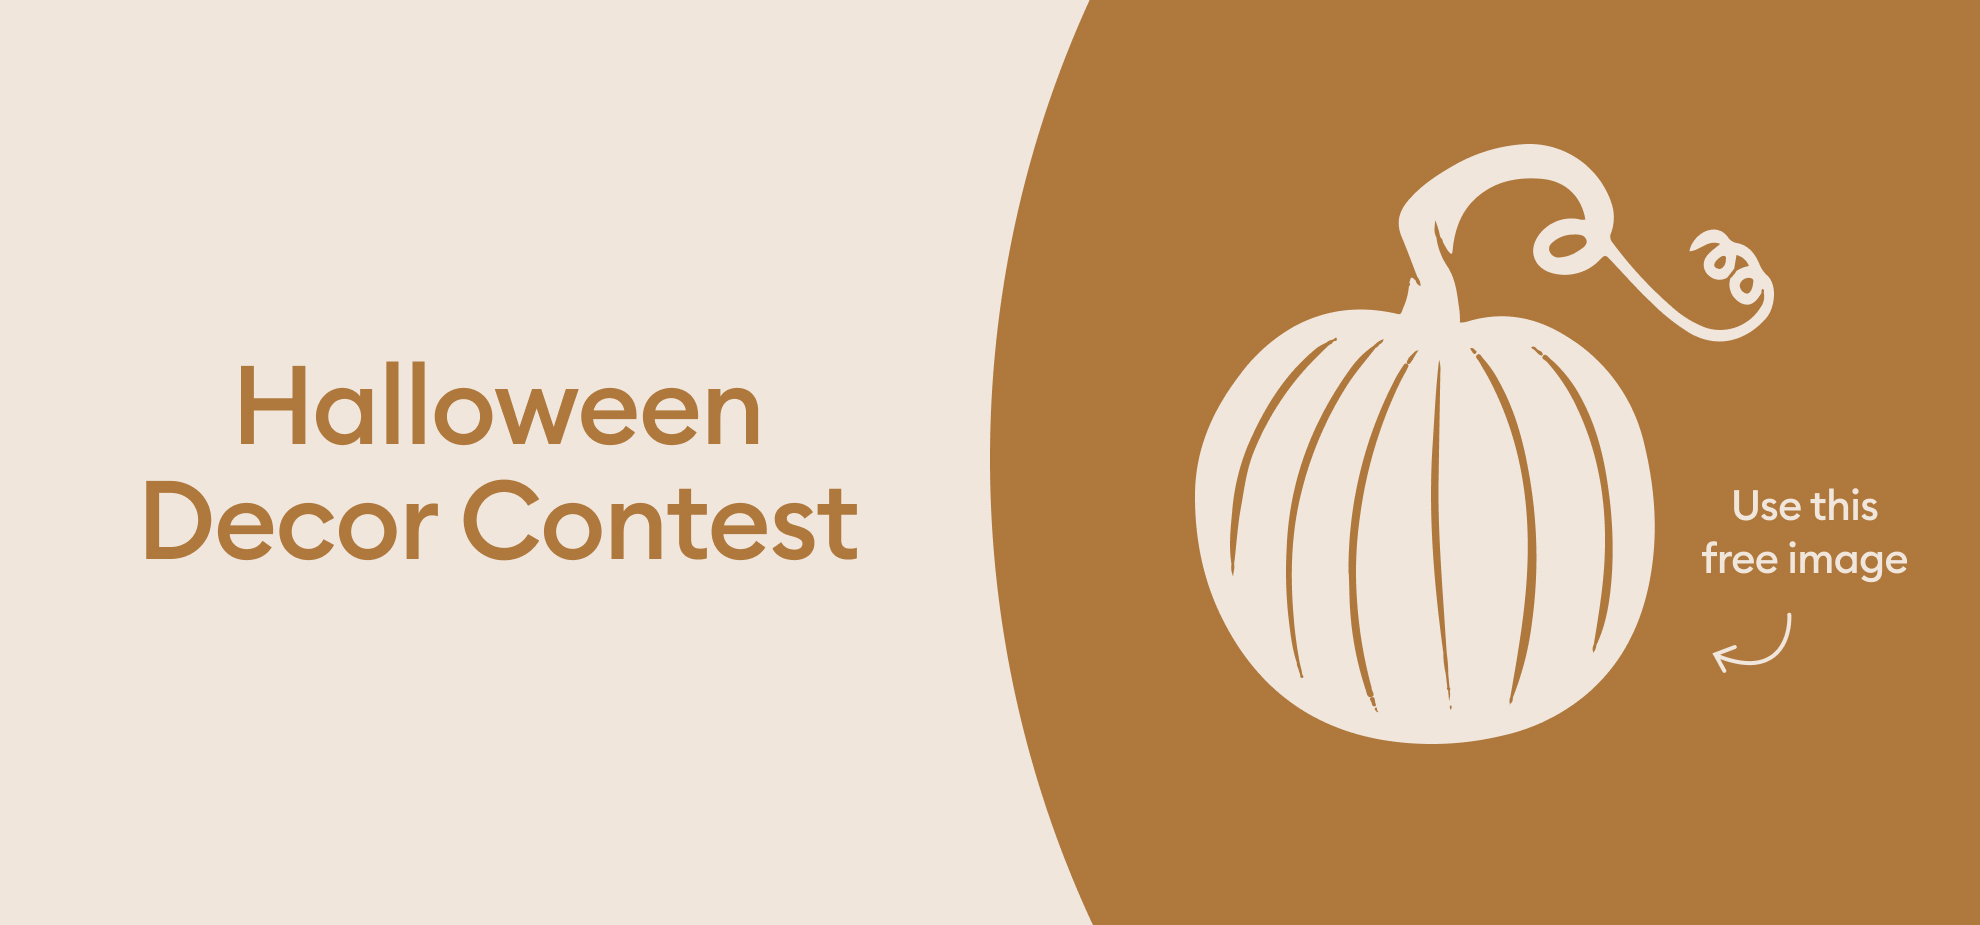 Halloween decorating challenge — Craft to win!